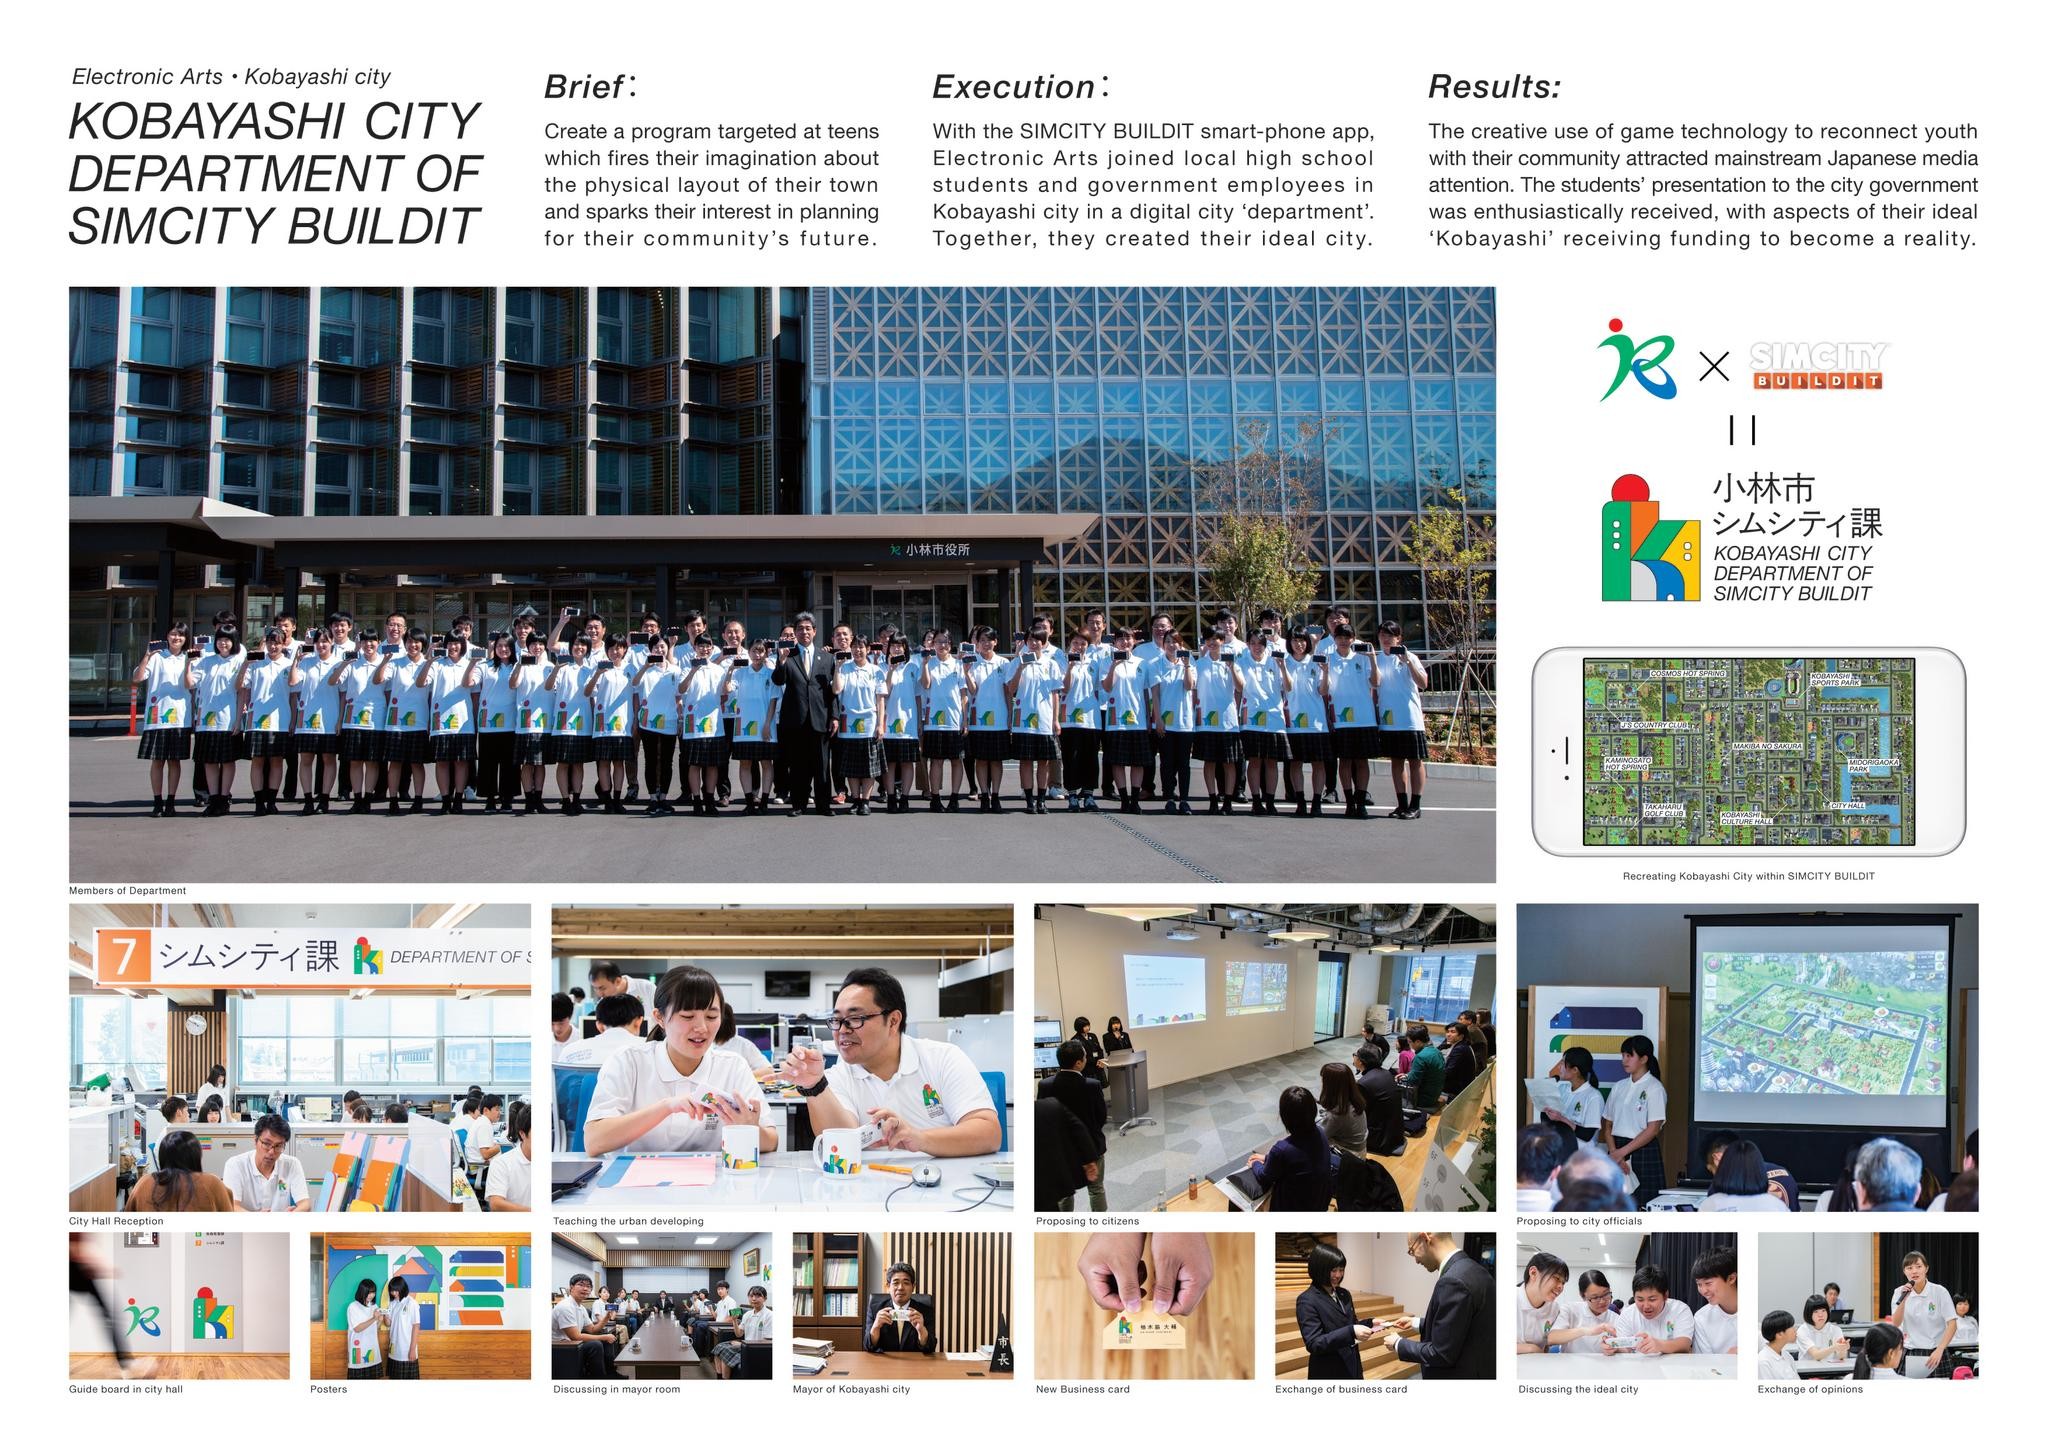 Kobayashi City Department of SimCity BuildIt